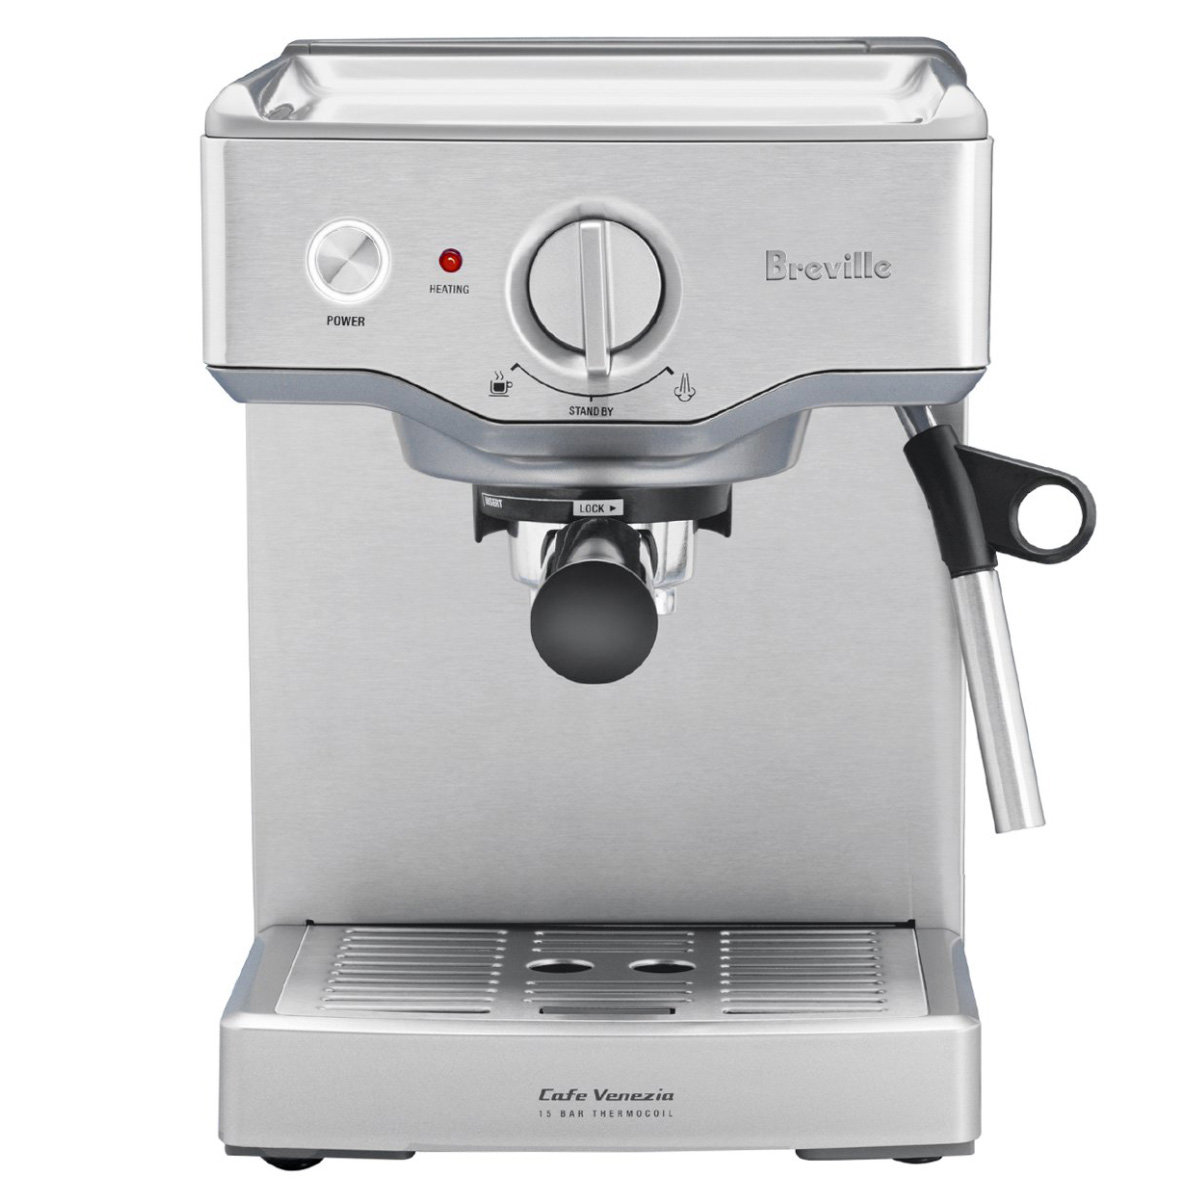 NEW Breville BES250BSS Cafe Venezia Coffee Machine ...